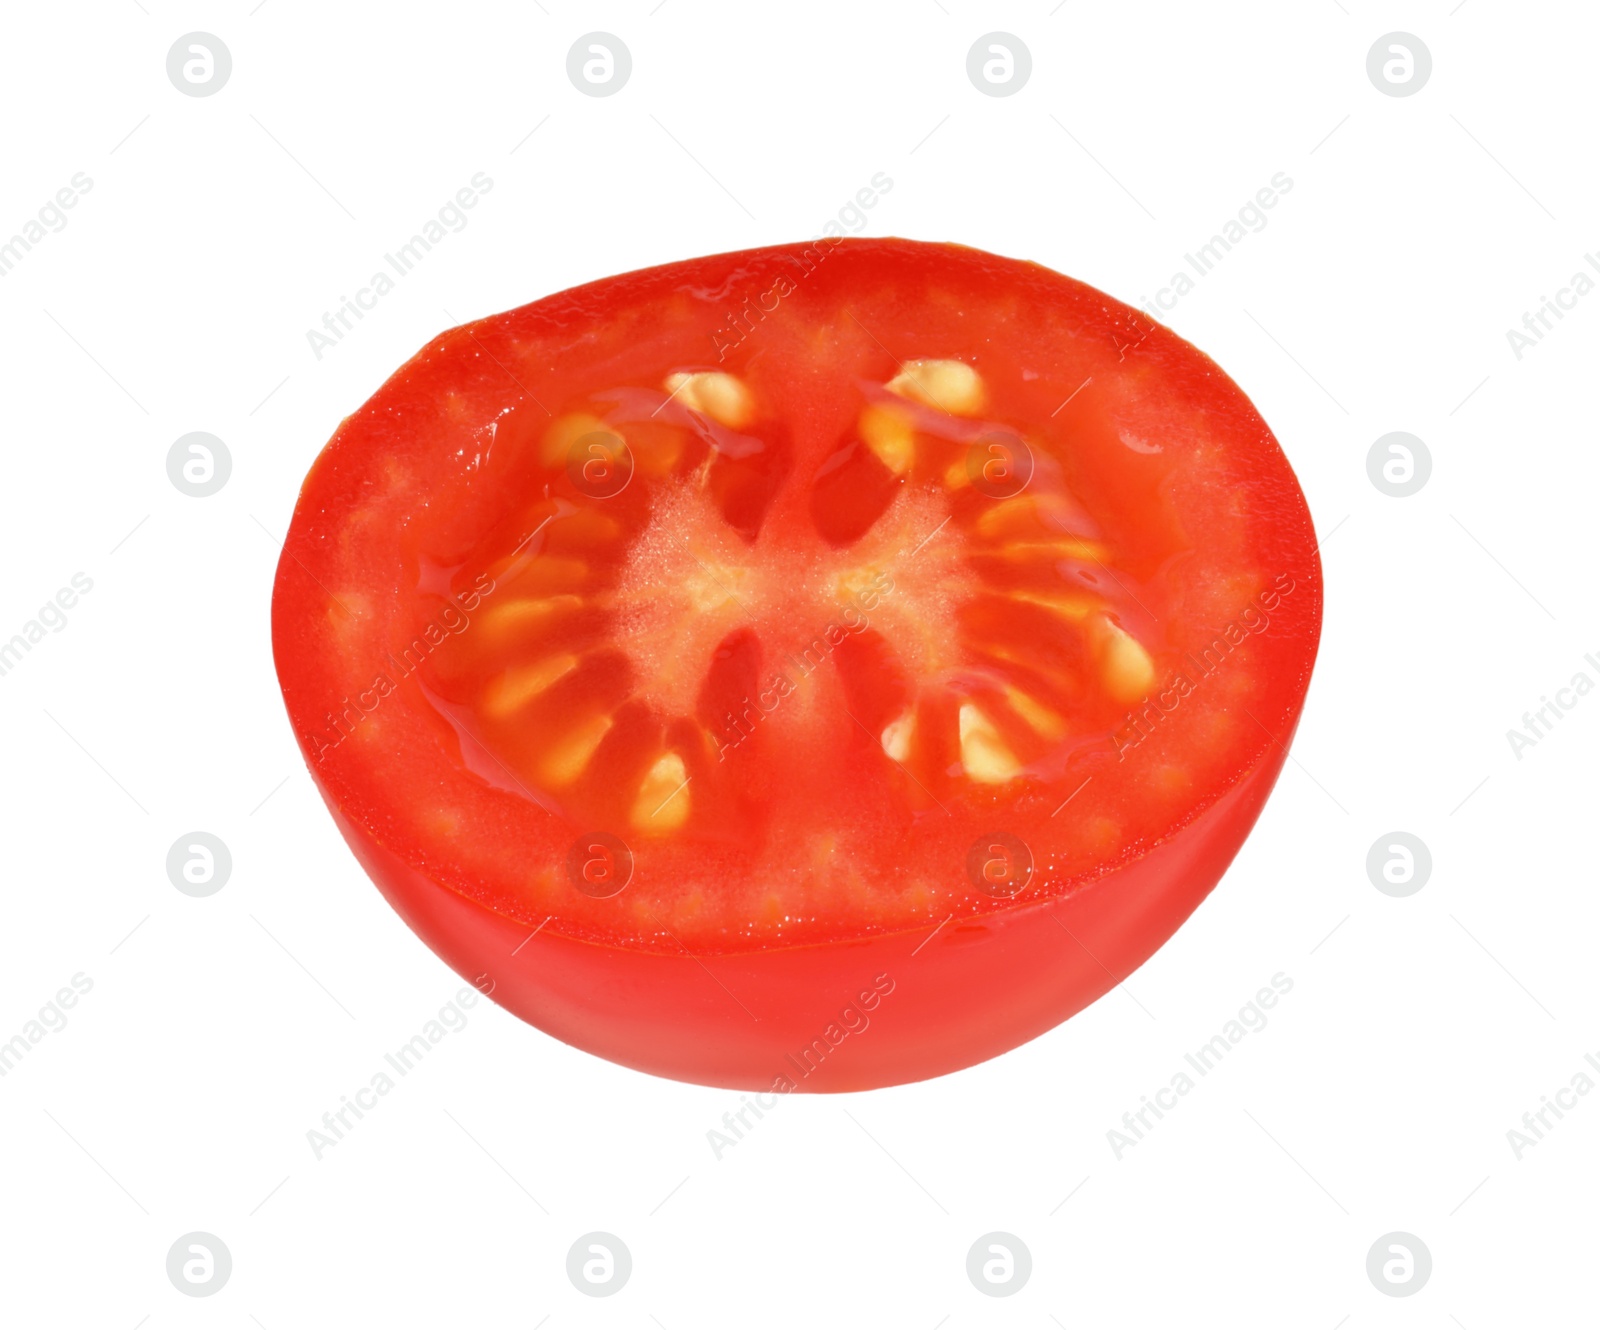 Photo of Half of ripe cherry tomato isolated on white